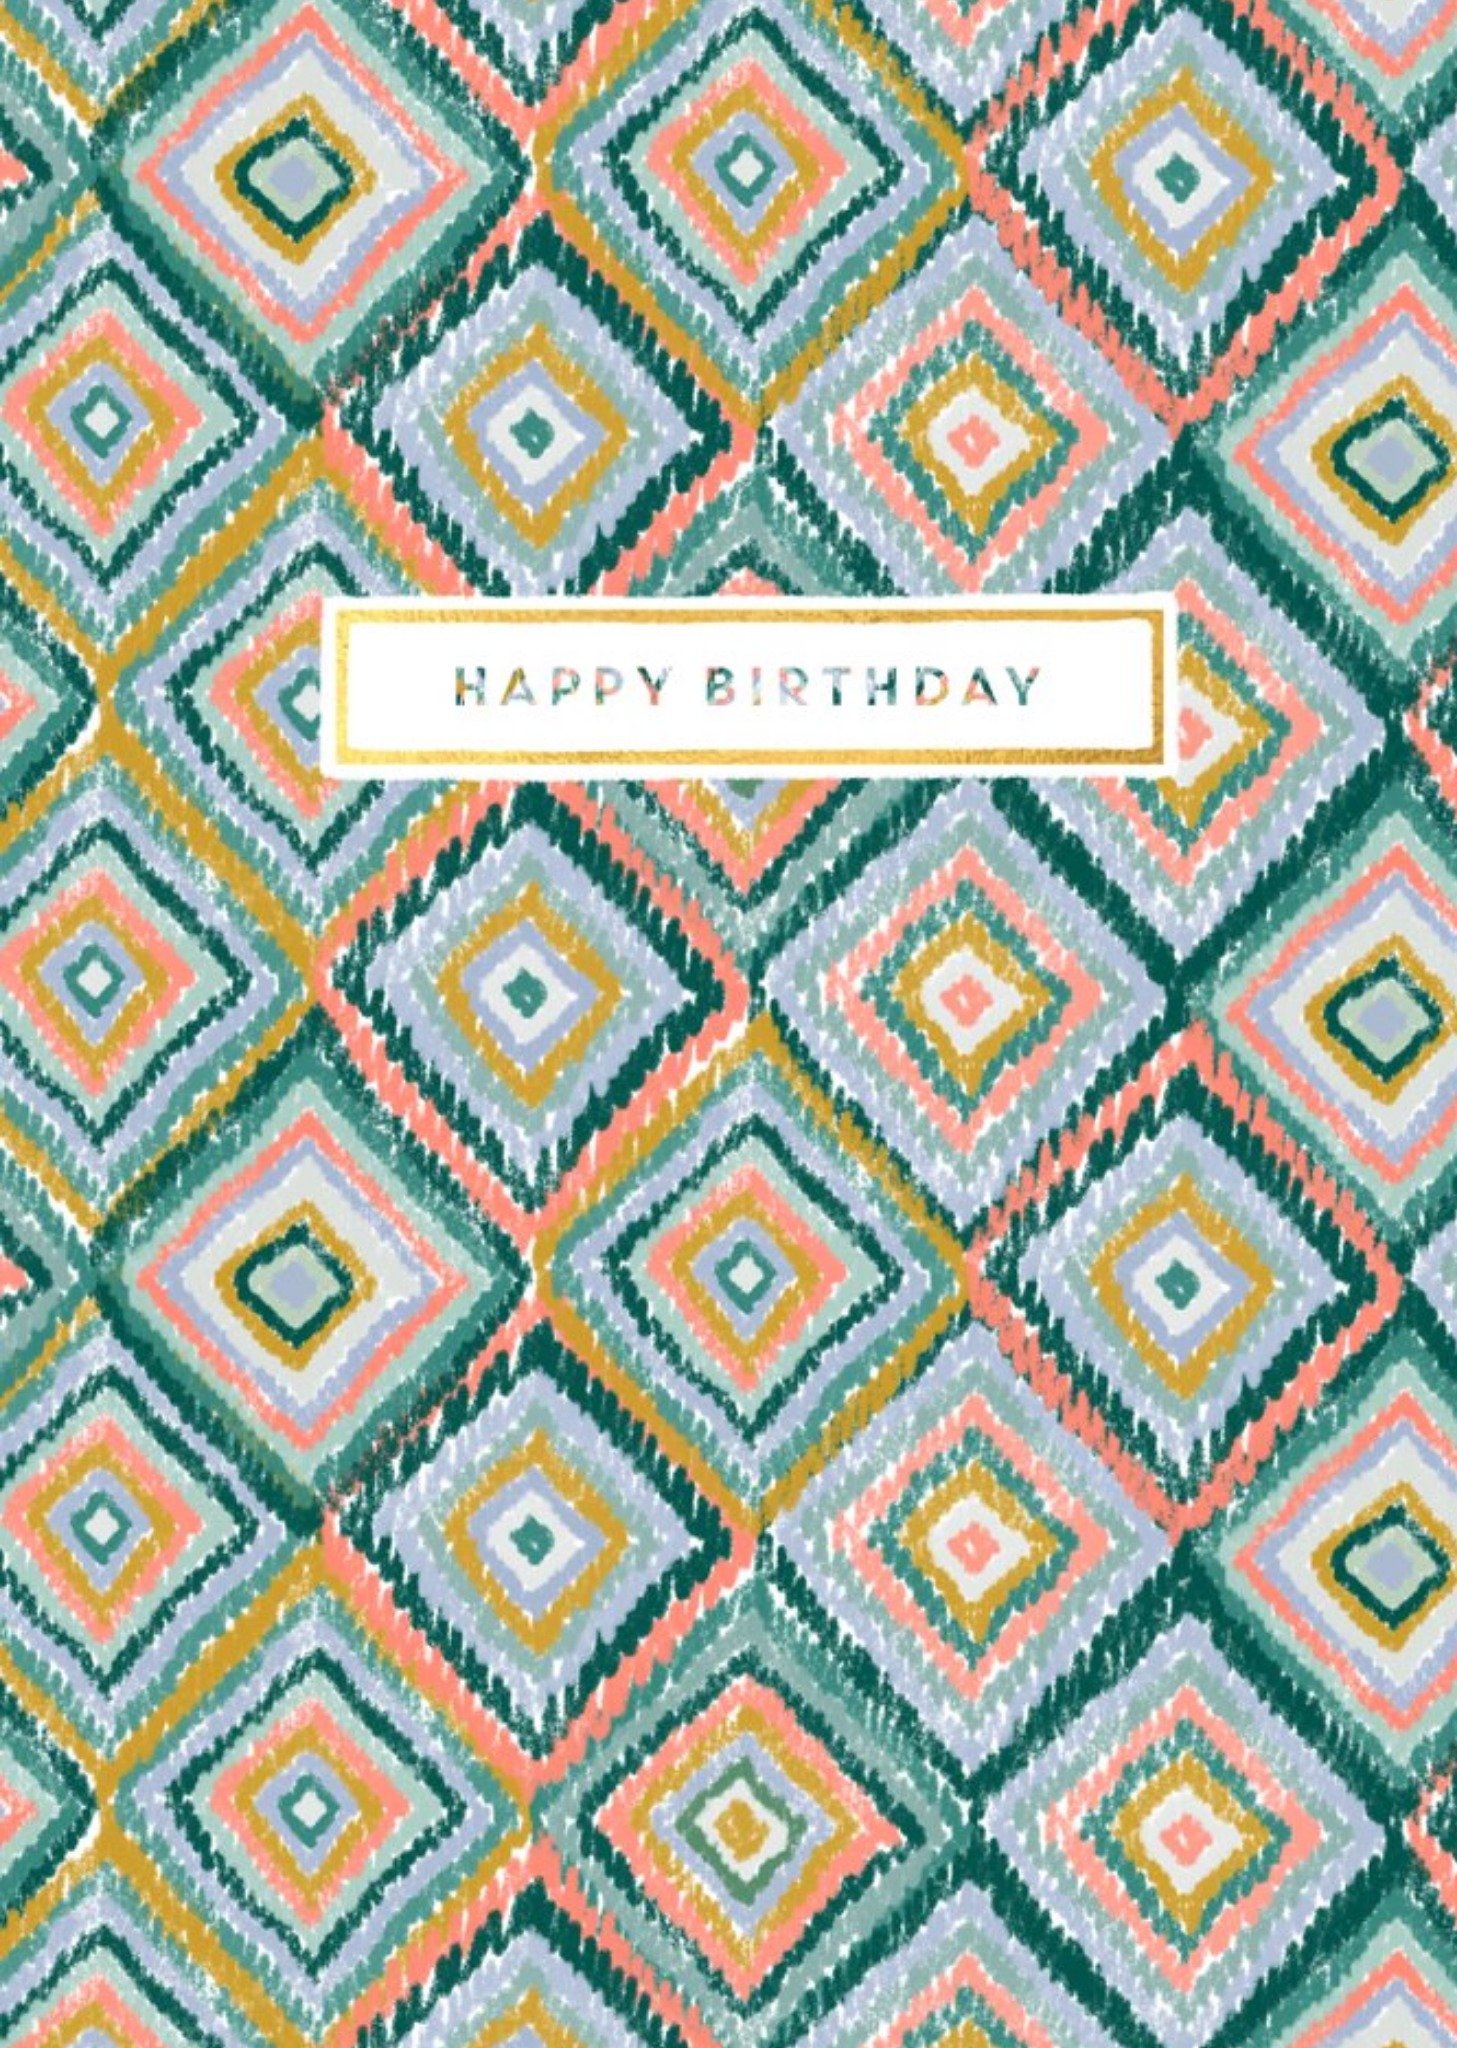 Moonpig Shake It Up Patterned Happy Birthday Card, Large